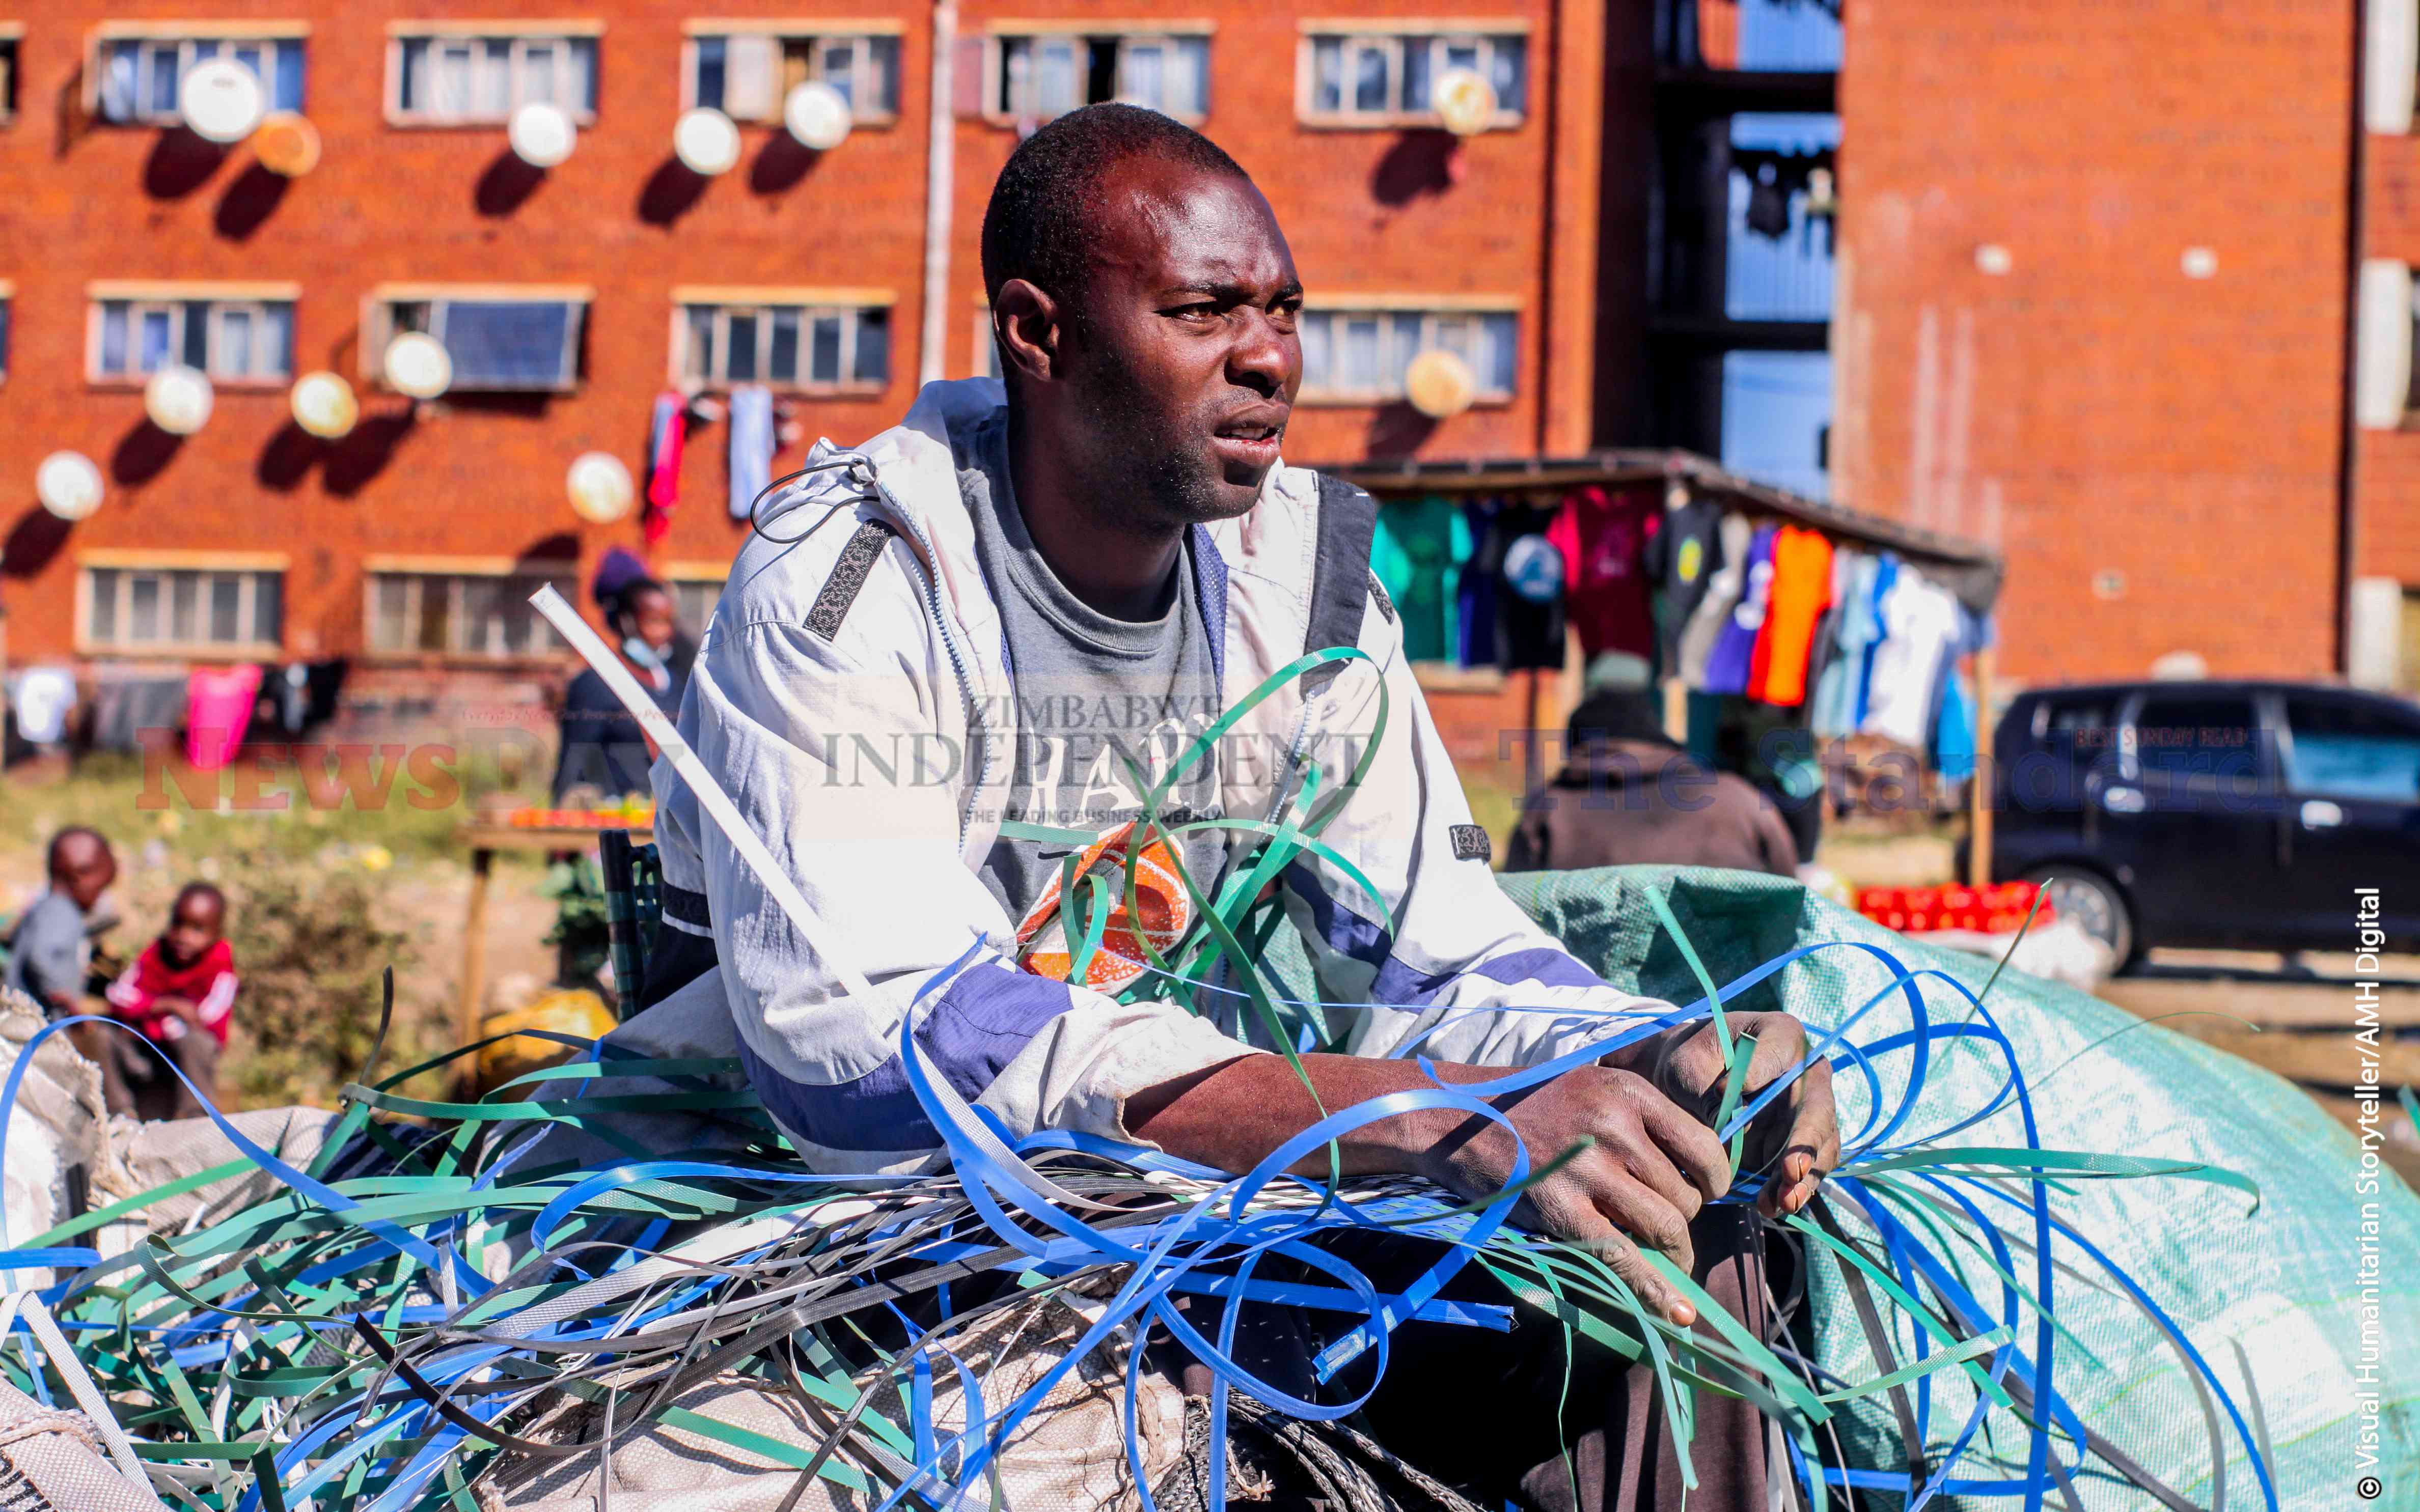 Martin Simbachako (33)  weaves baskets in Mbare ,turning trash into treasure.